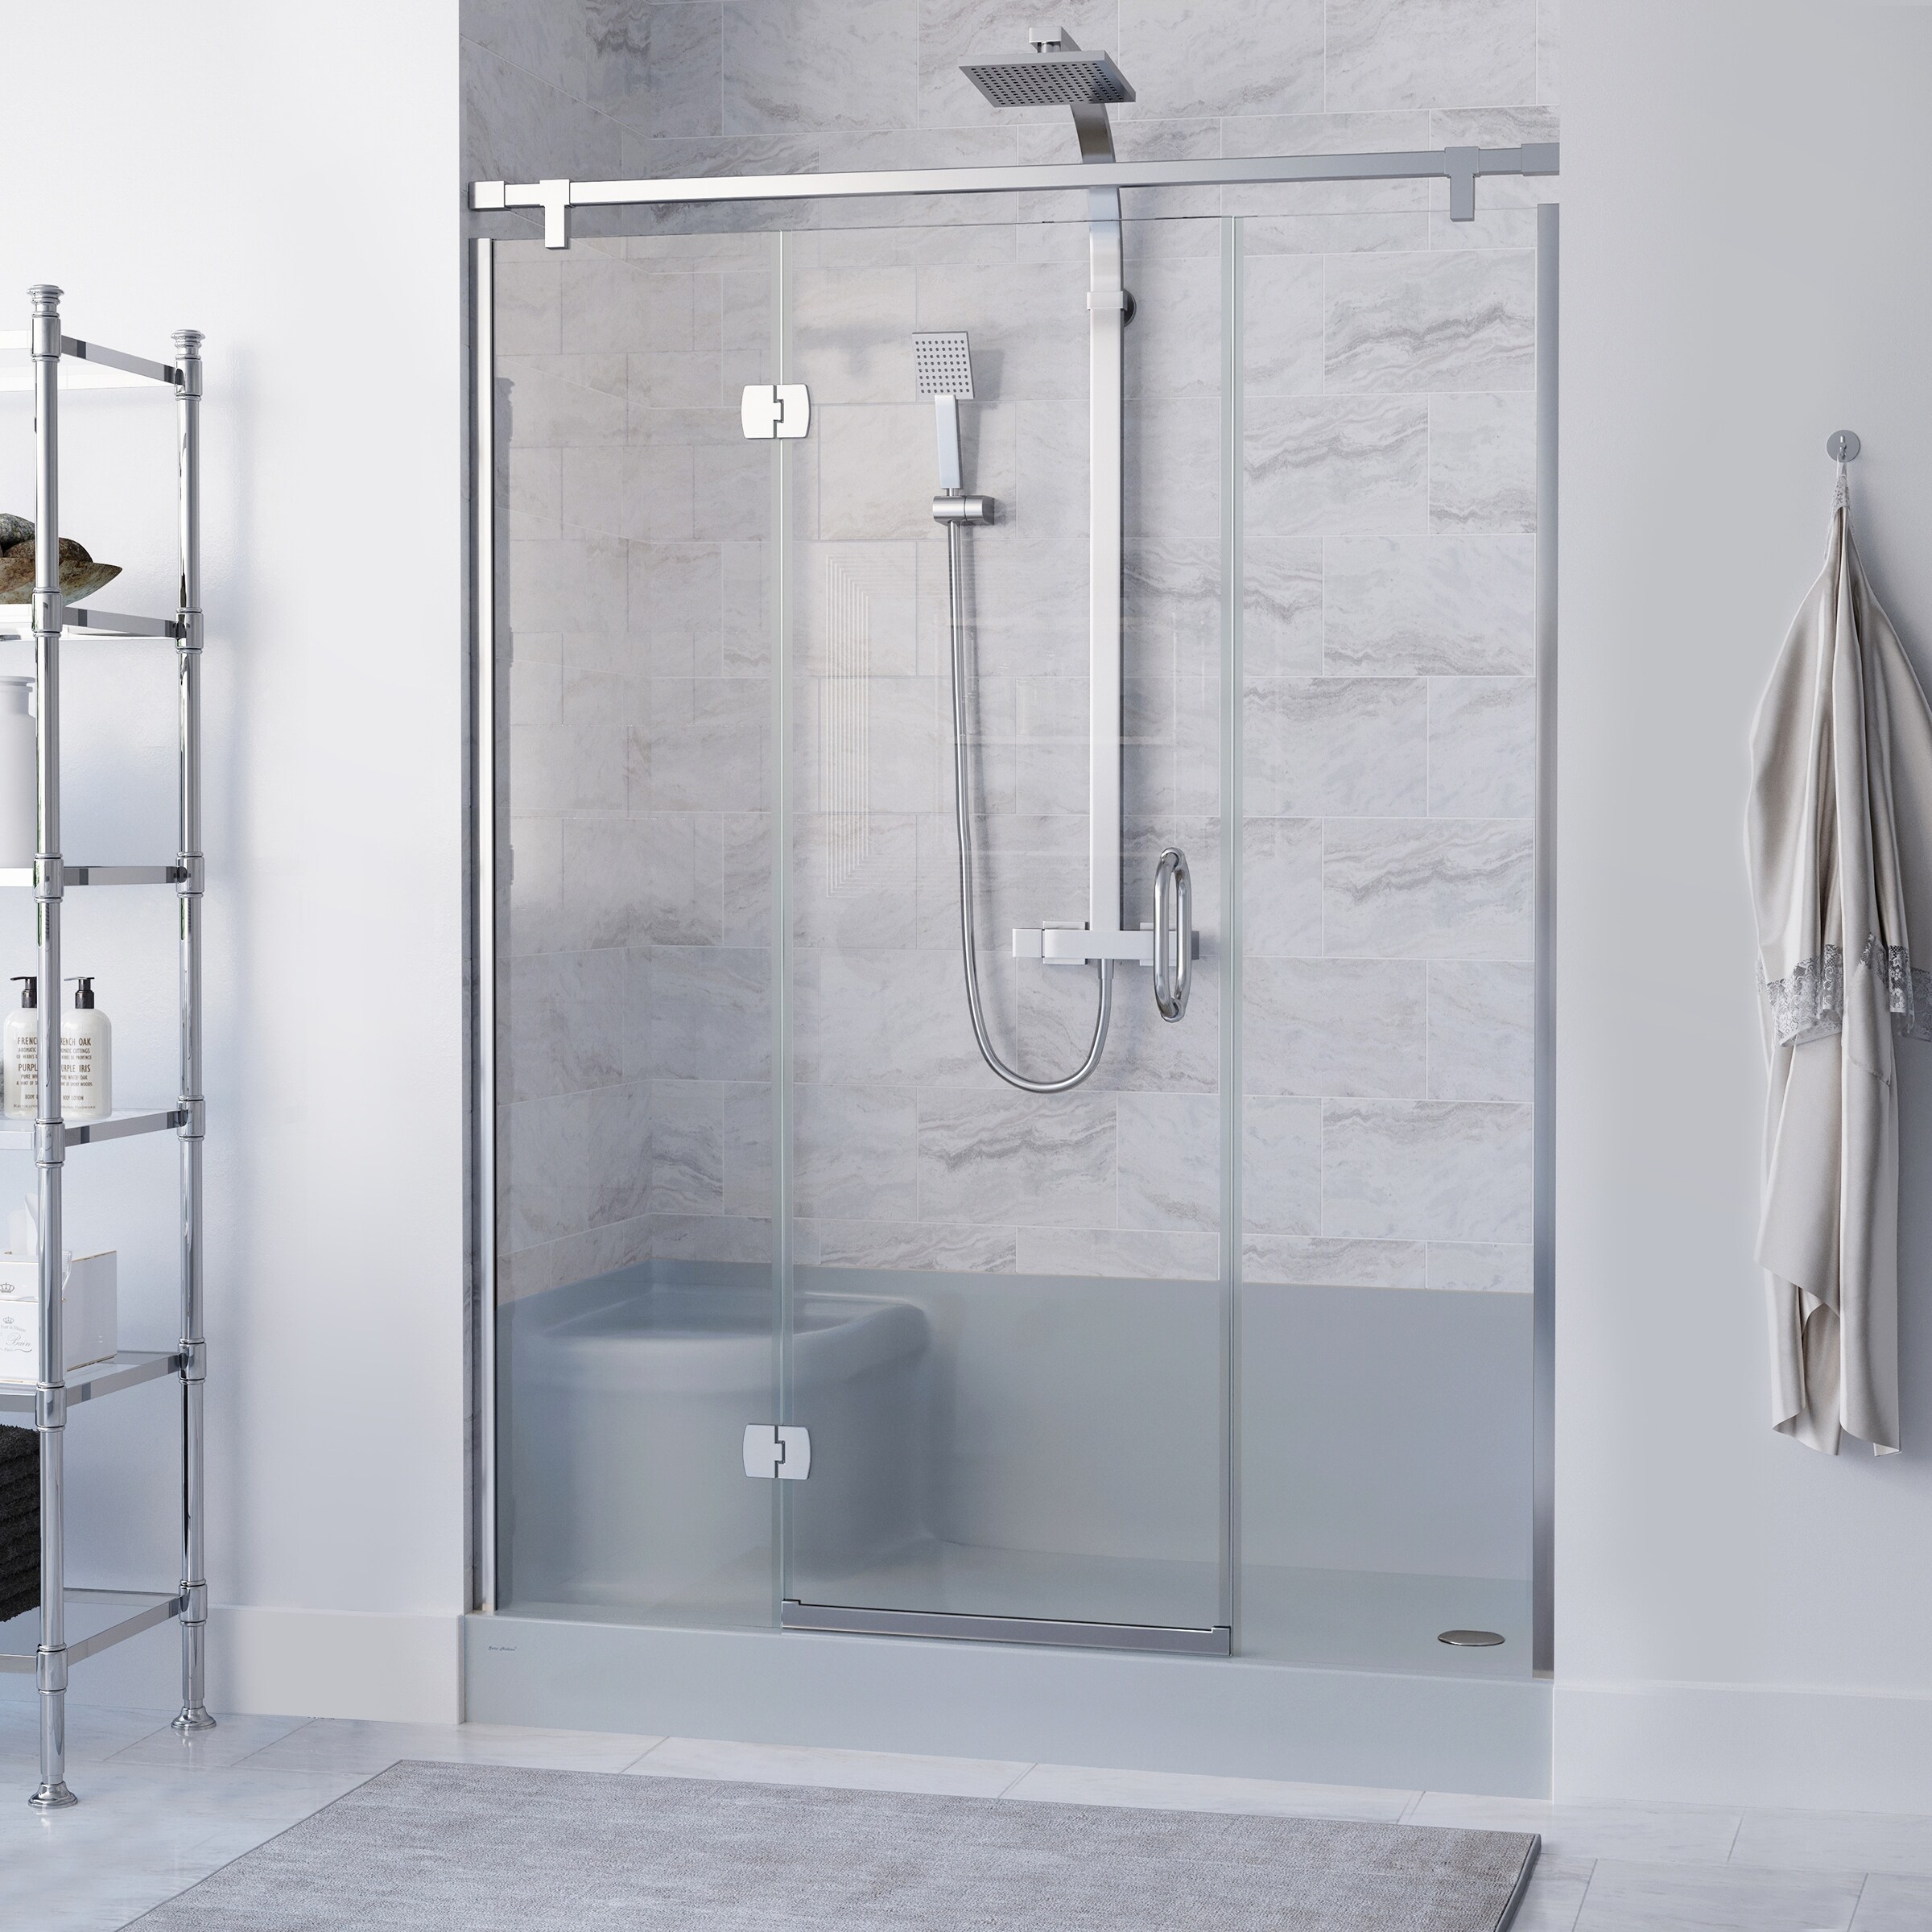 White ABS Toilet Shower Cabin Bathroom Sets Cabinet Sink Combo - China  Bathroom Sets, Shower Rooms